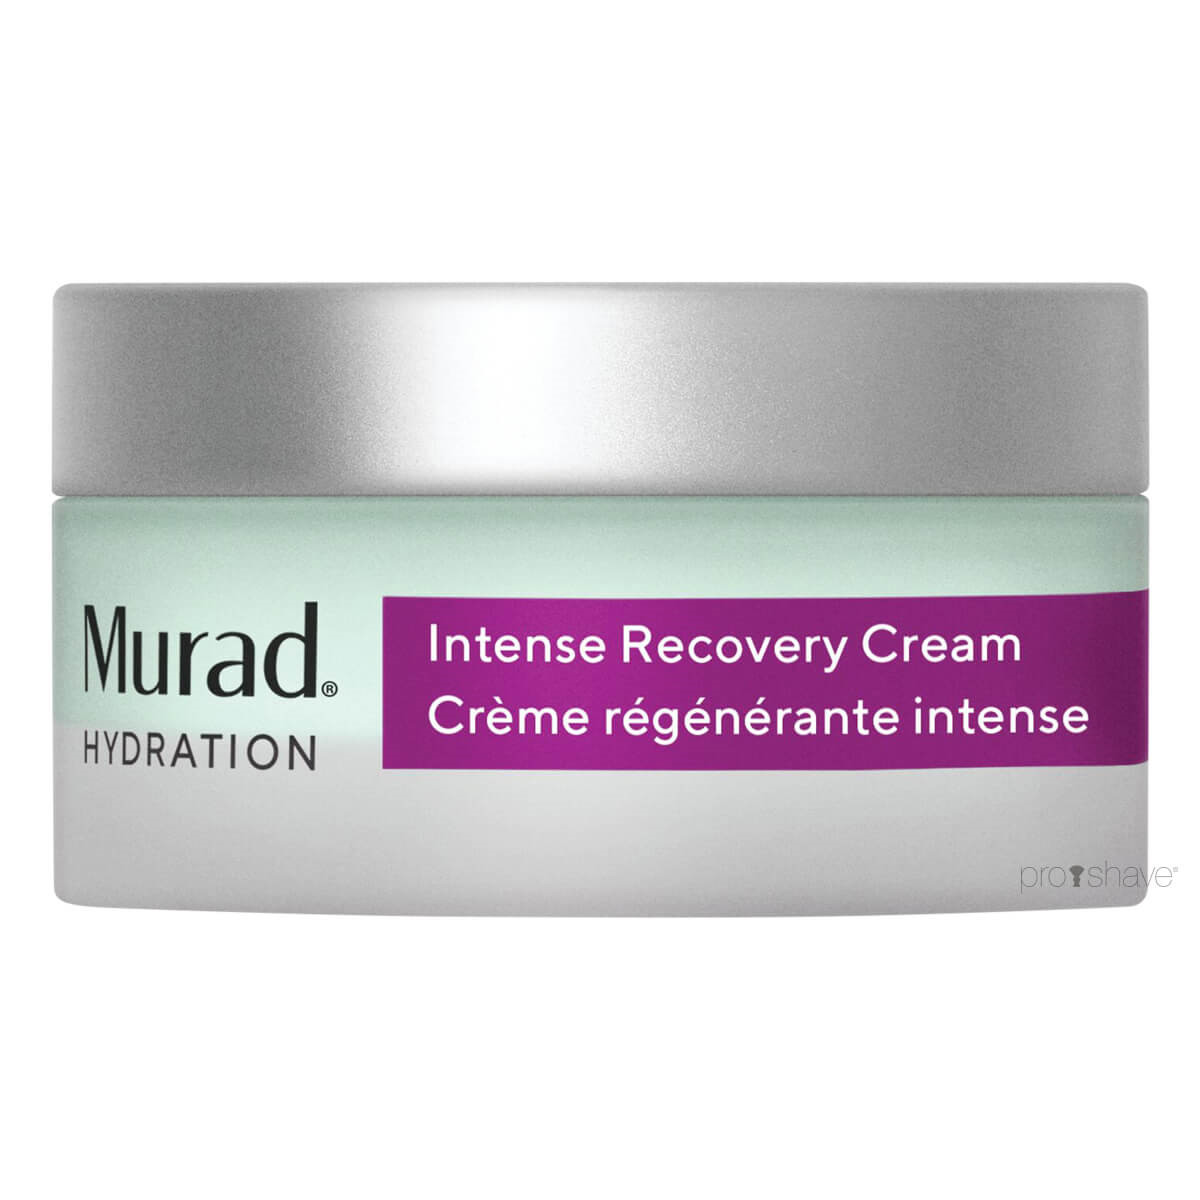 5: Murad Hydration Intense Recovery Cream, Hydration, 50 ml.